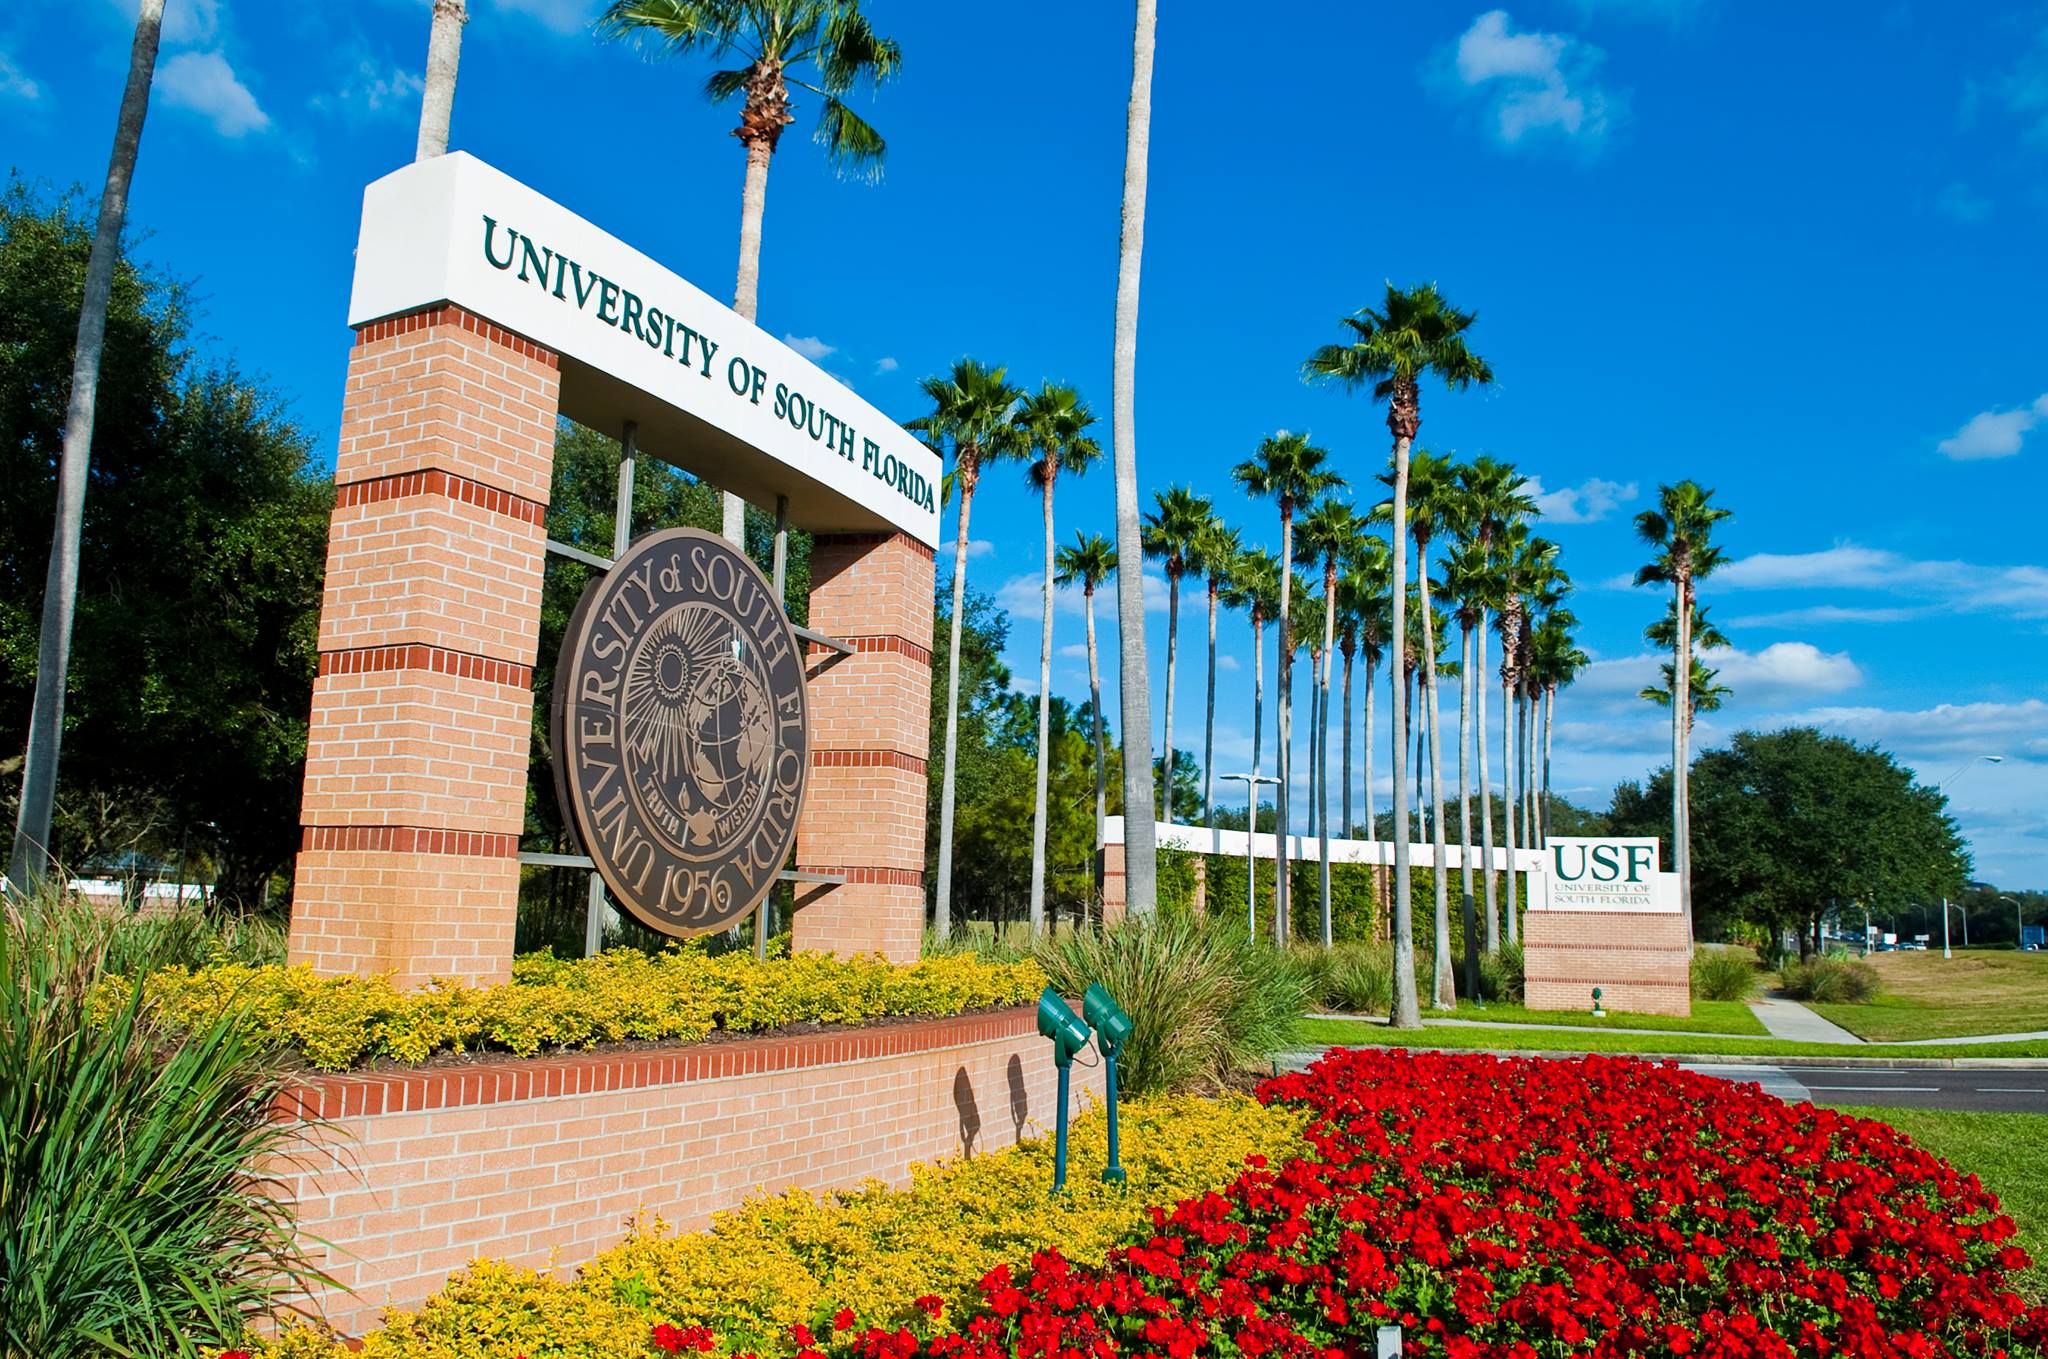 University Of South Florida garden view